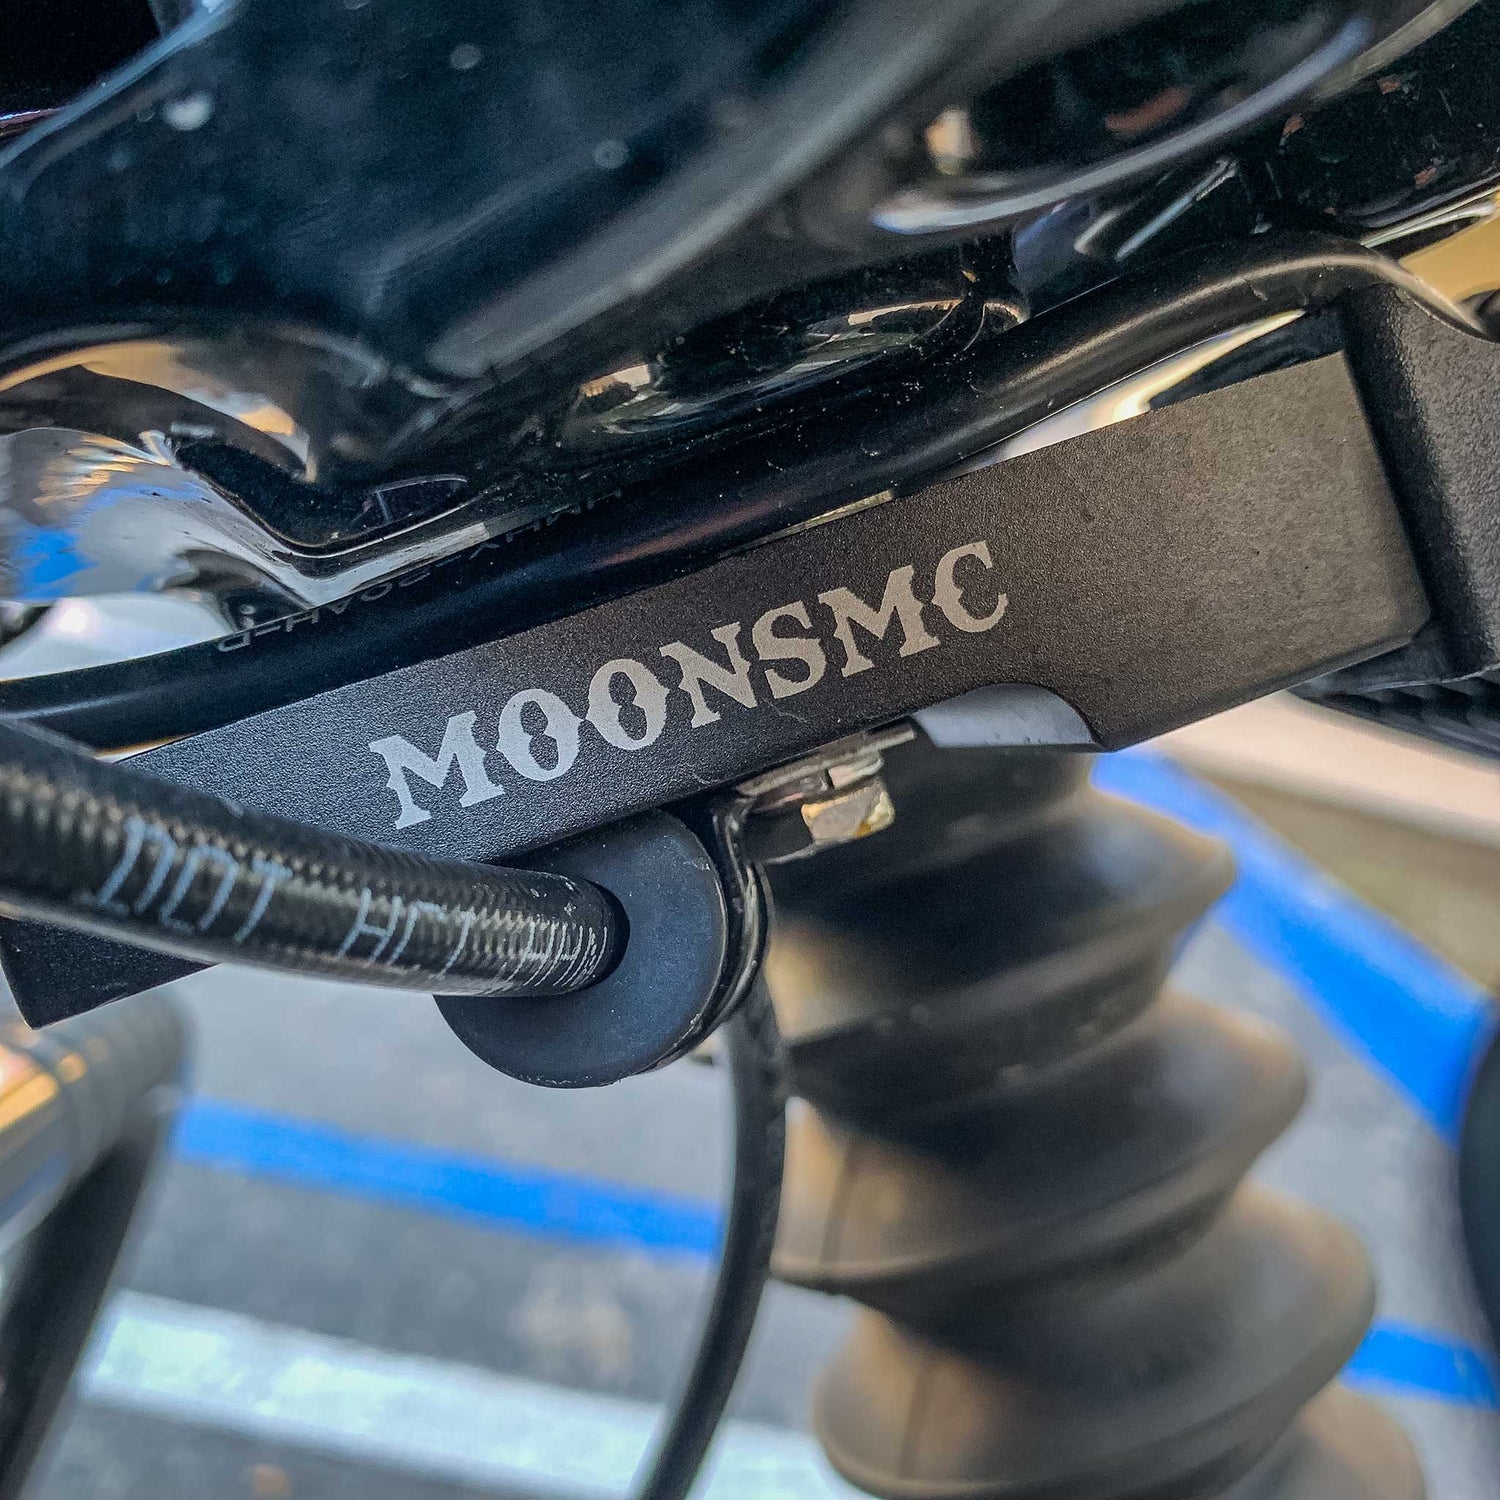 MOONSMC® LED Light Bar Bracket, Lighting,Parts, MOONS, MOONSMC® // Moons Motorcycle Culture